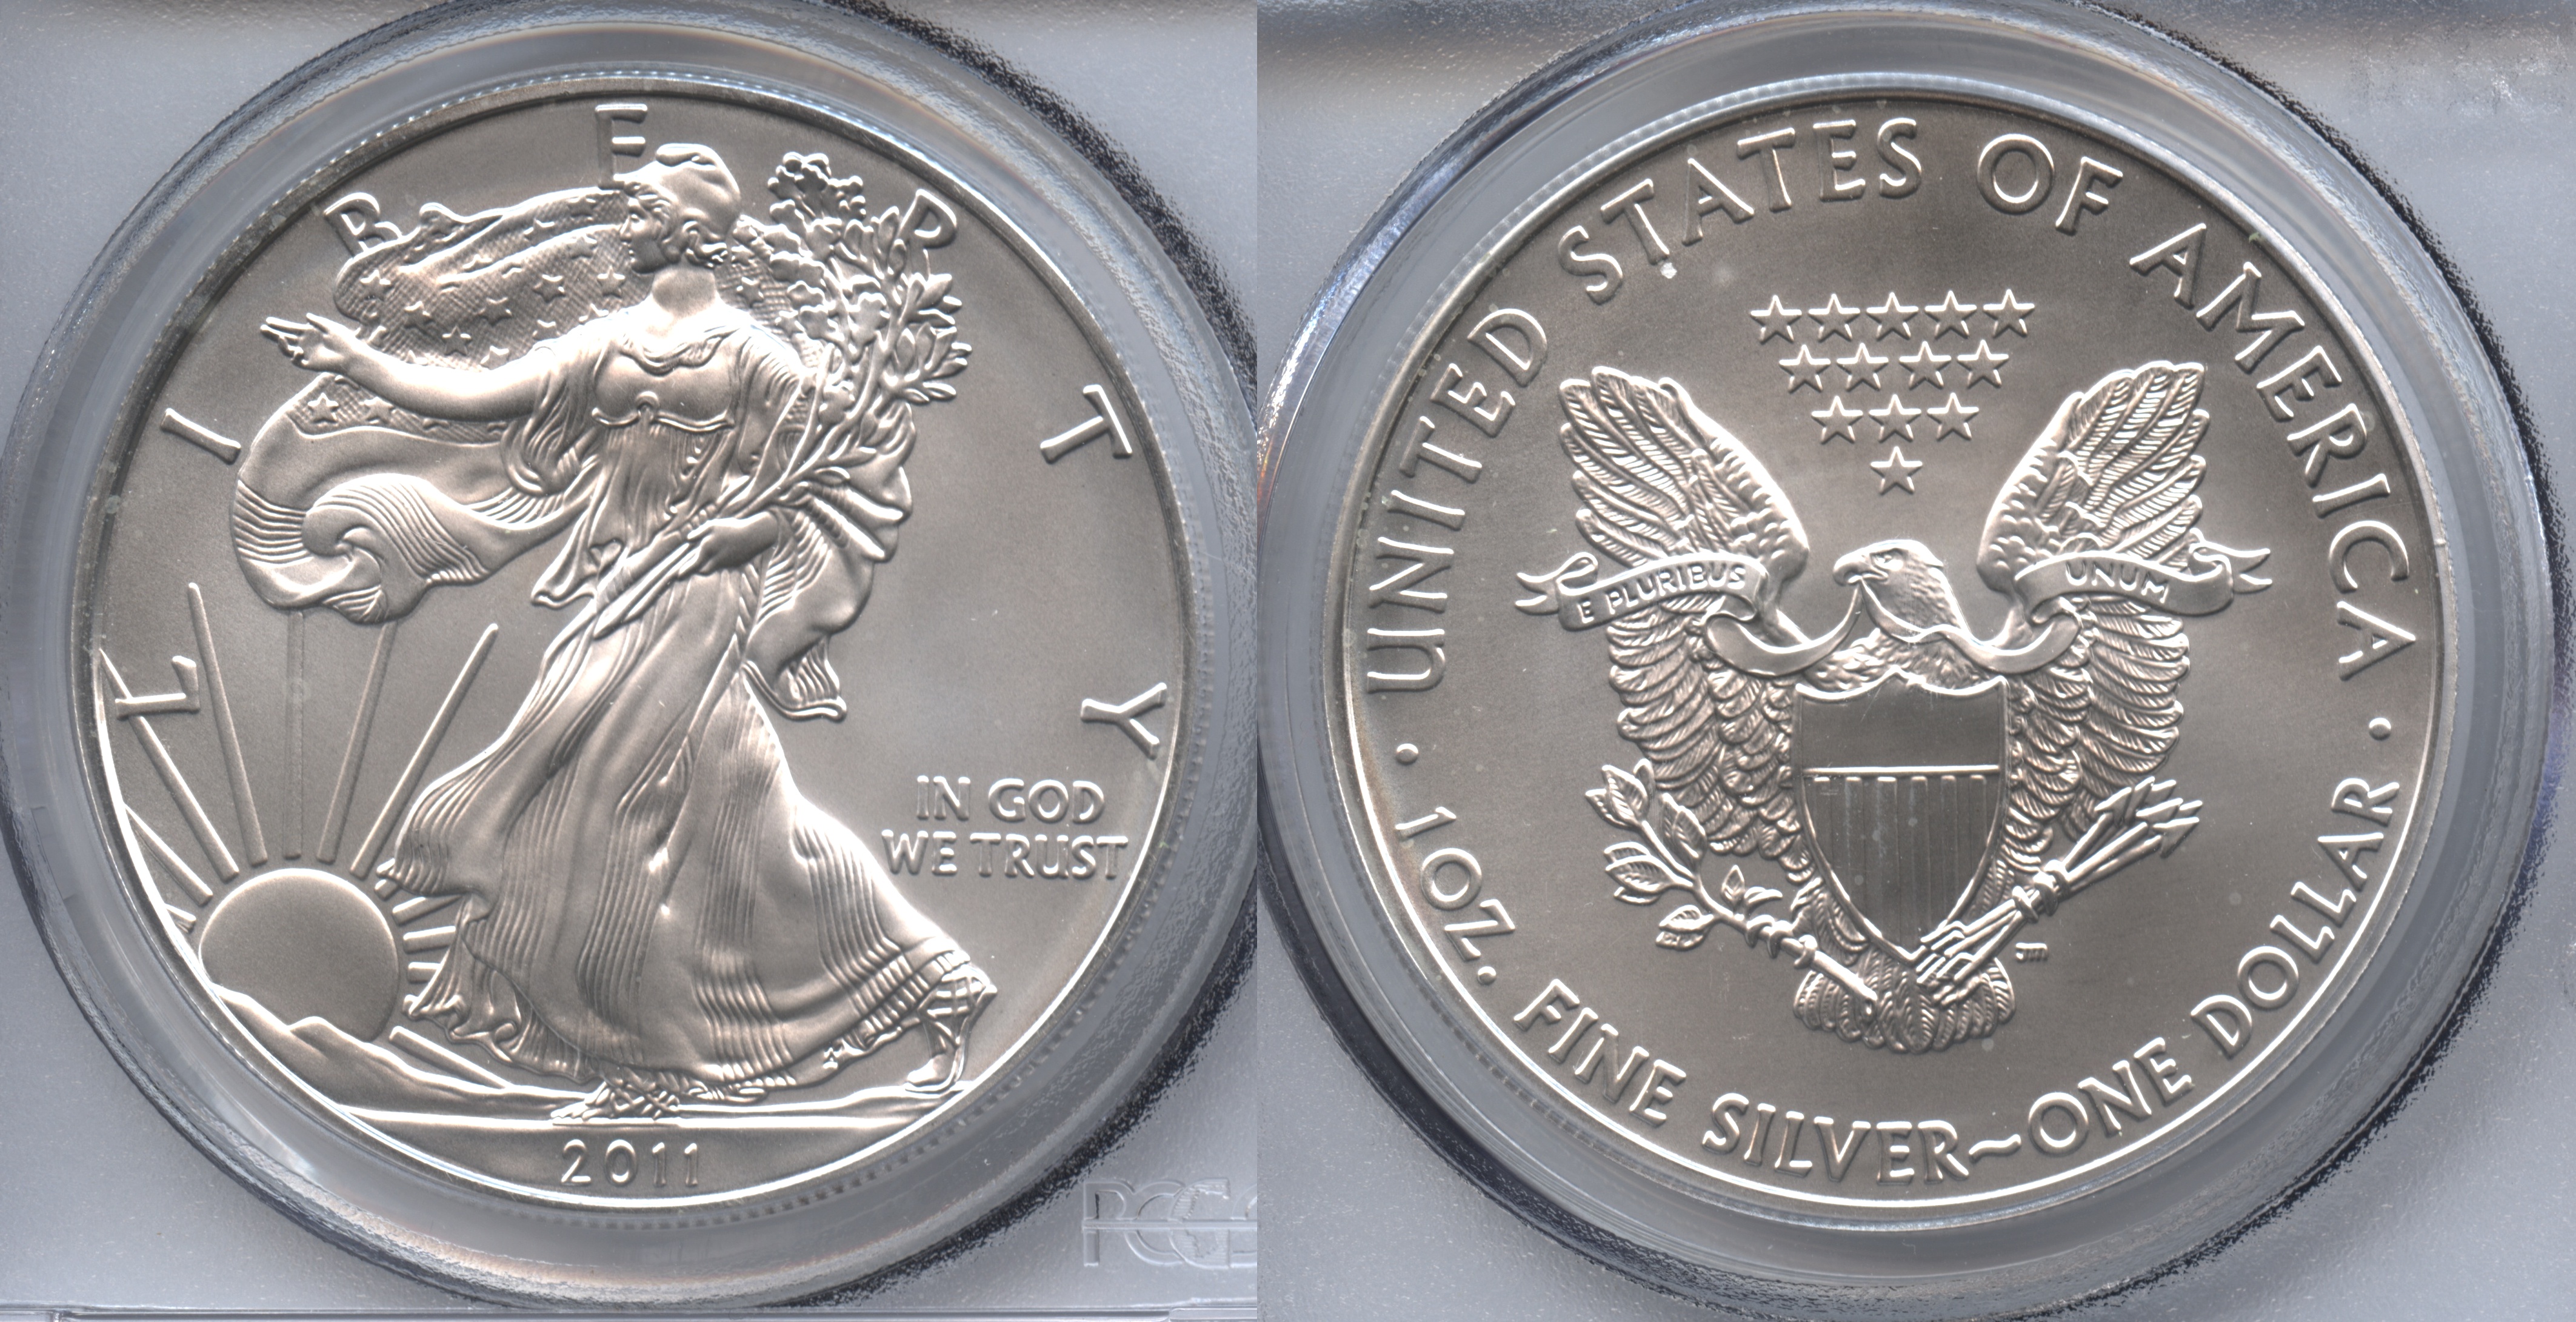 2011 San Francisco Silver Eagle Dollar PCGS MS-70